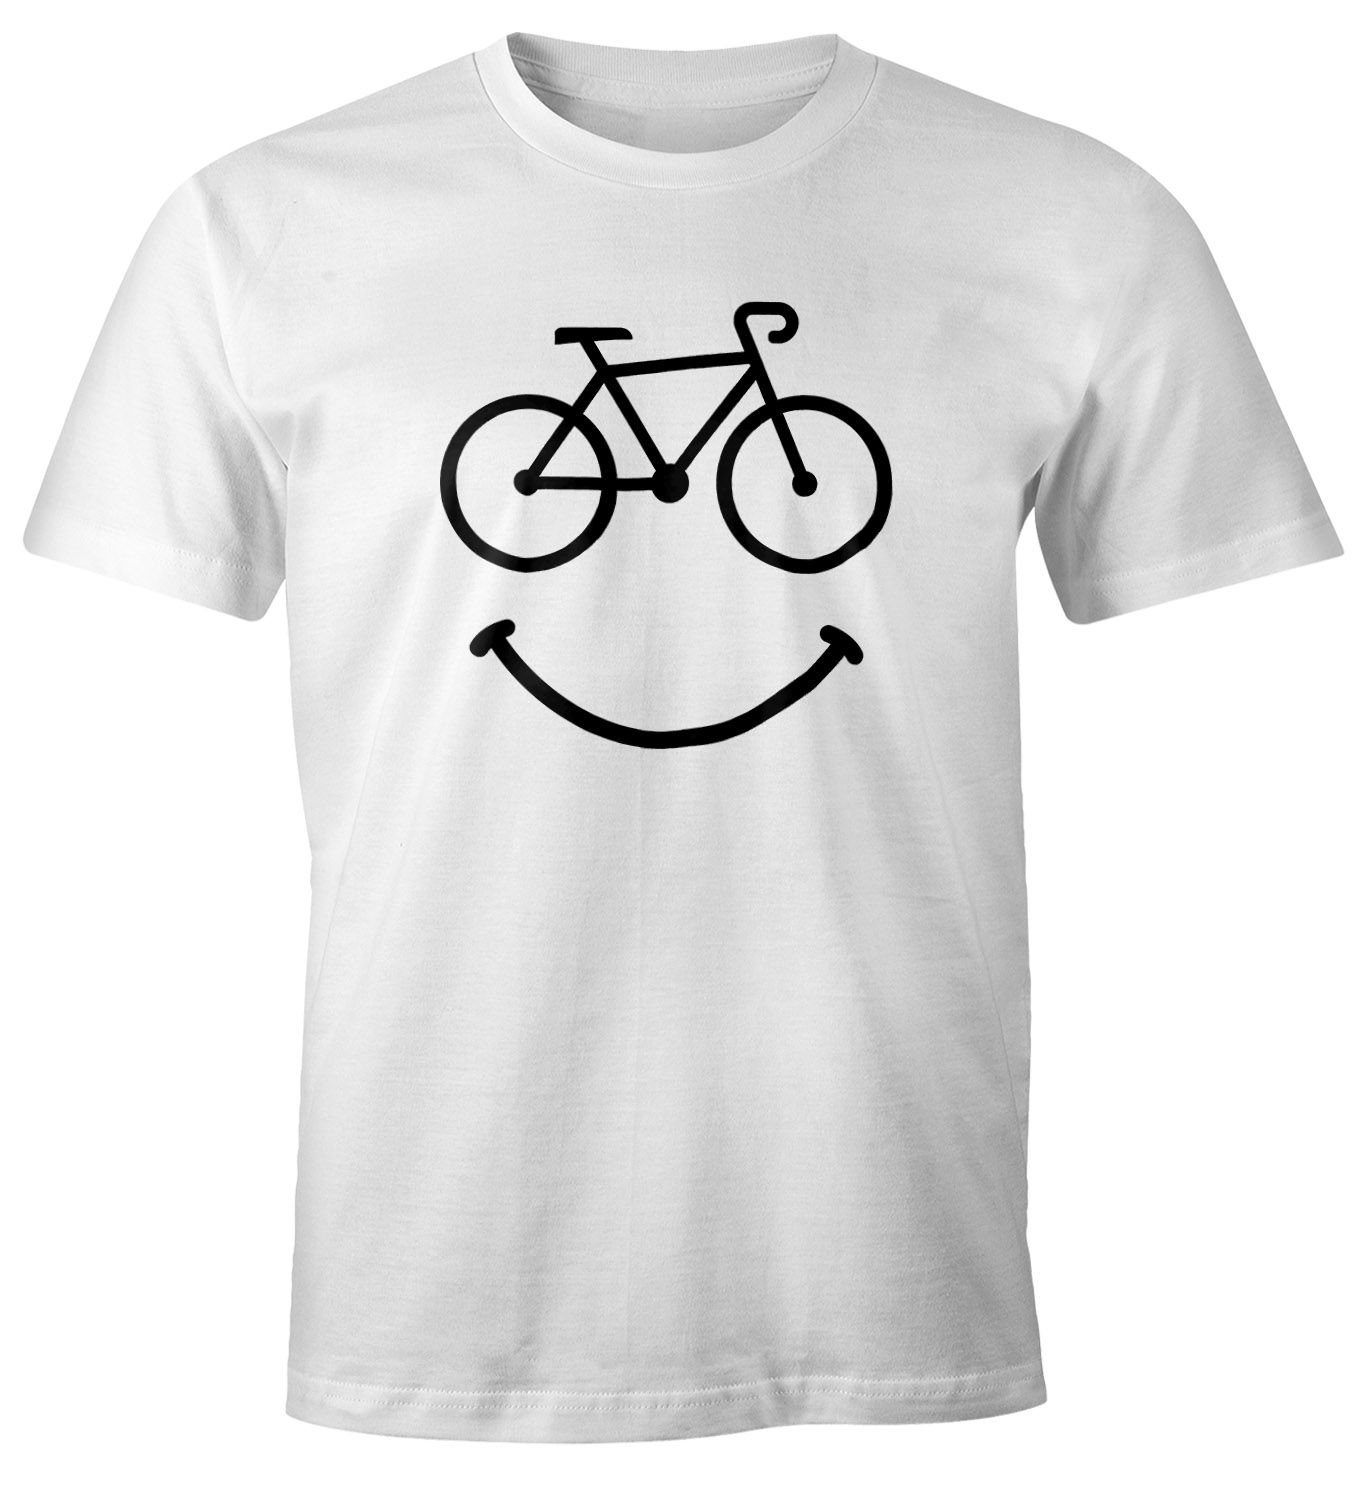 MoonWorks Print-Shirt Fahrrad Herren T-Shirt Smile Happy Bike Radfahren Fun-Shirt Moonworks® mit Print weiß